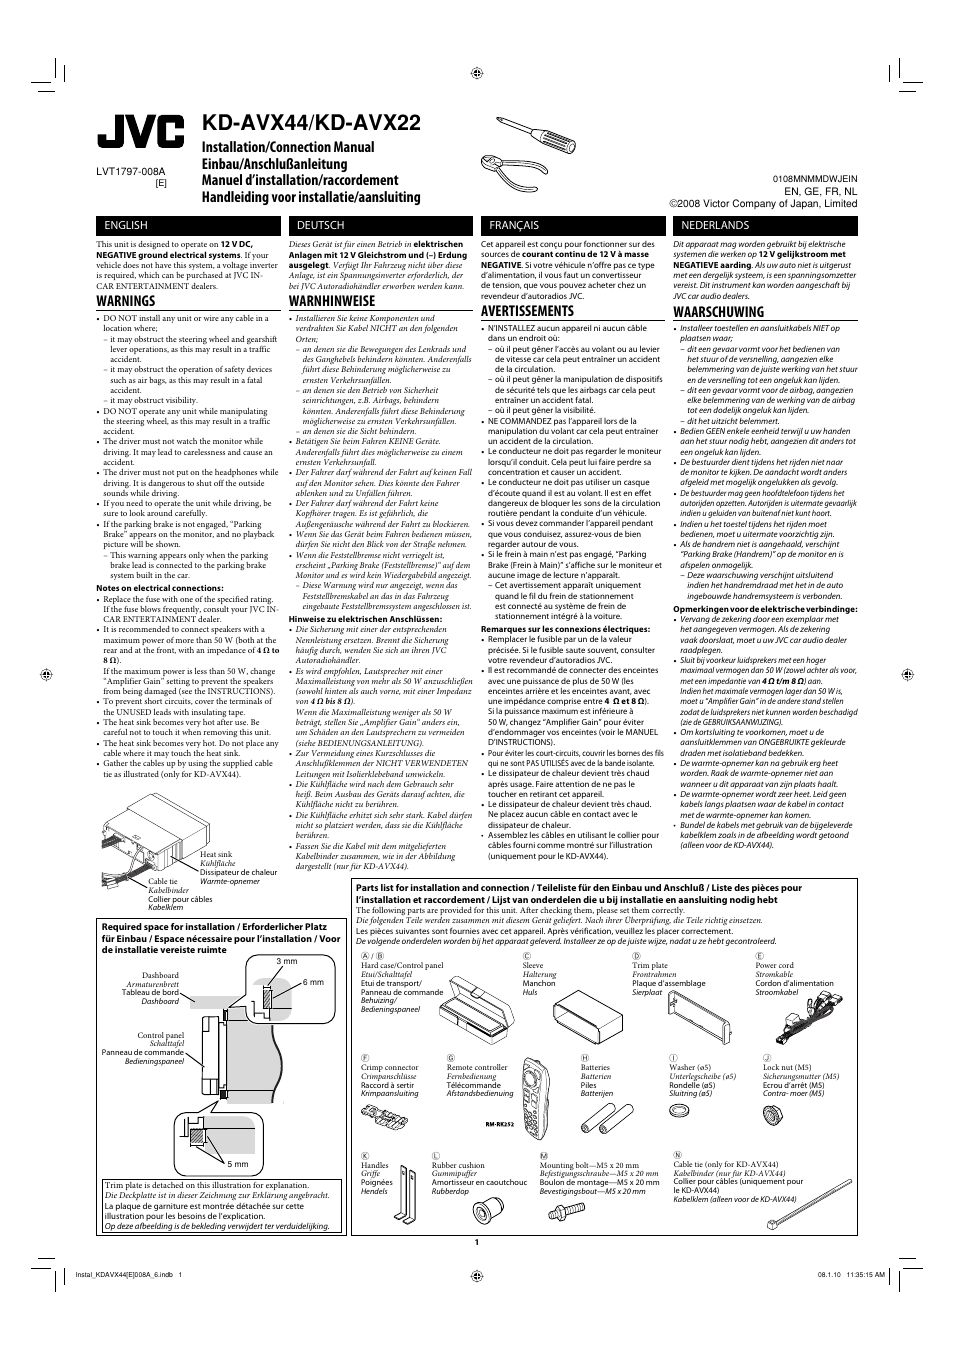 JVC DVD/CD Receiver KD-AVX22 User Manual | 6 pages